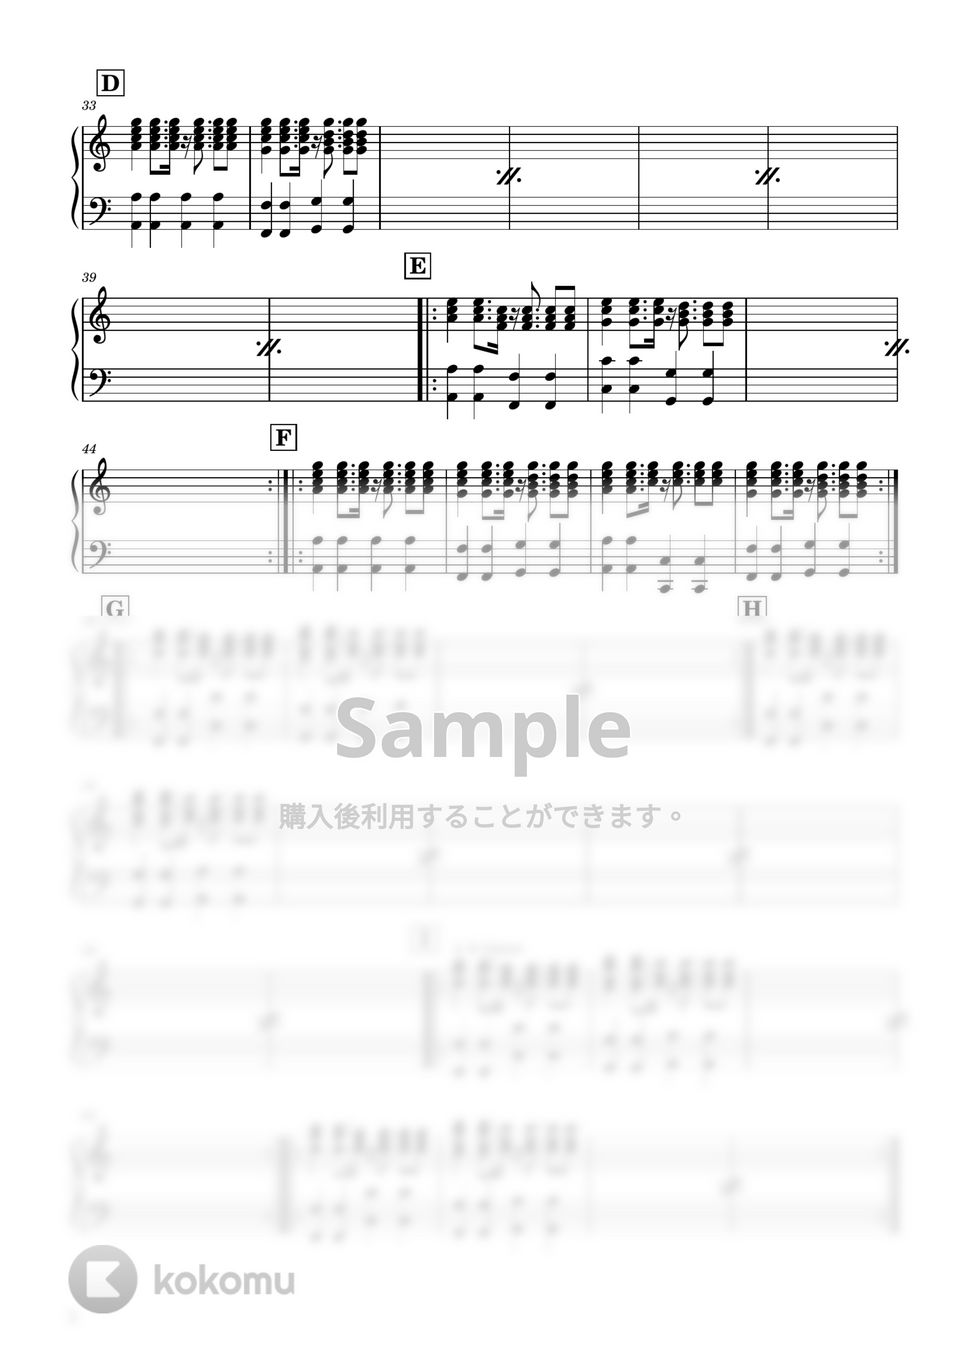 Orangestar - DAYBREAK FRONTLINE (ピアノパート) by Ray